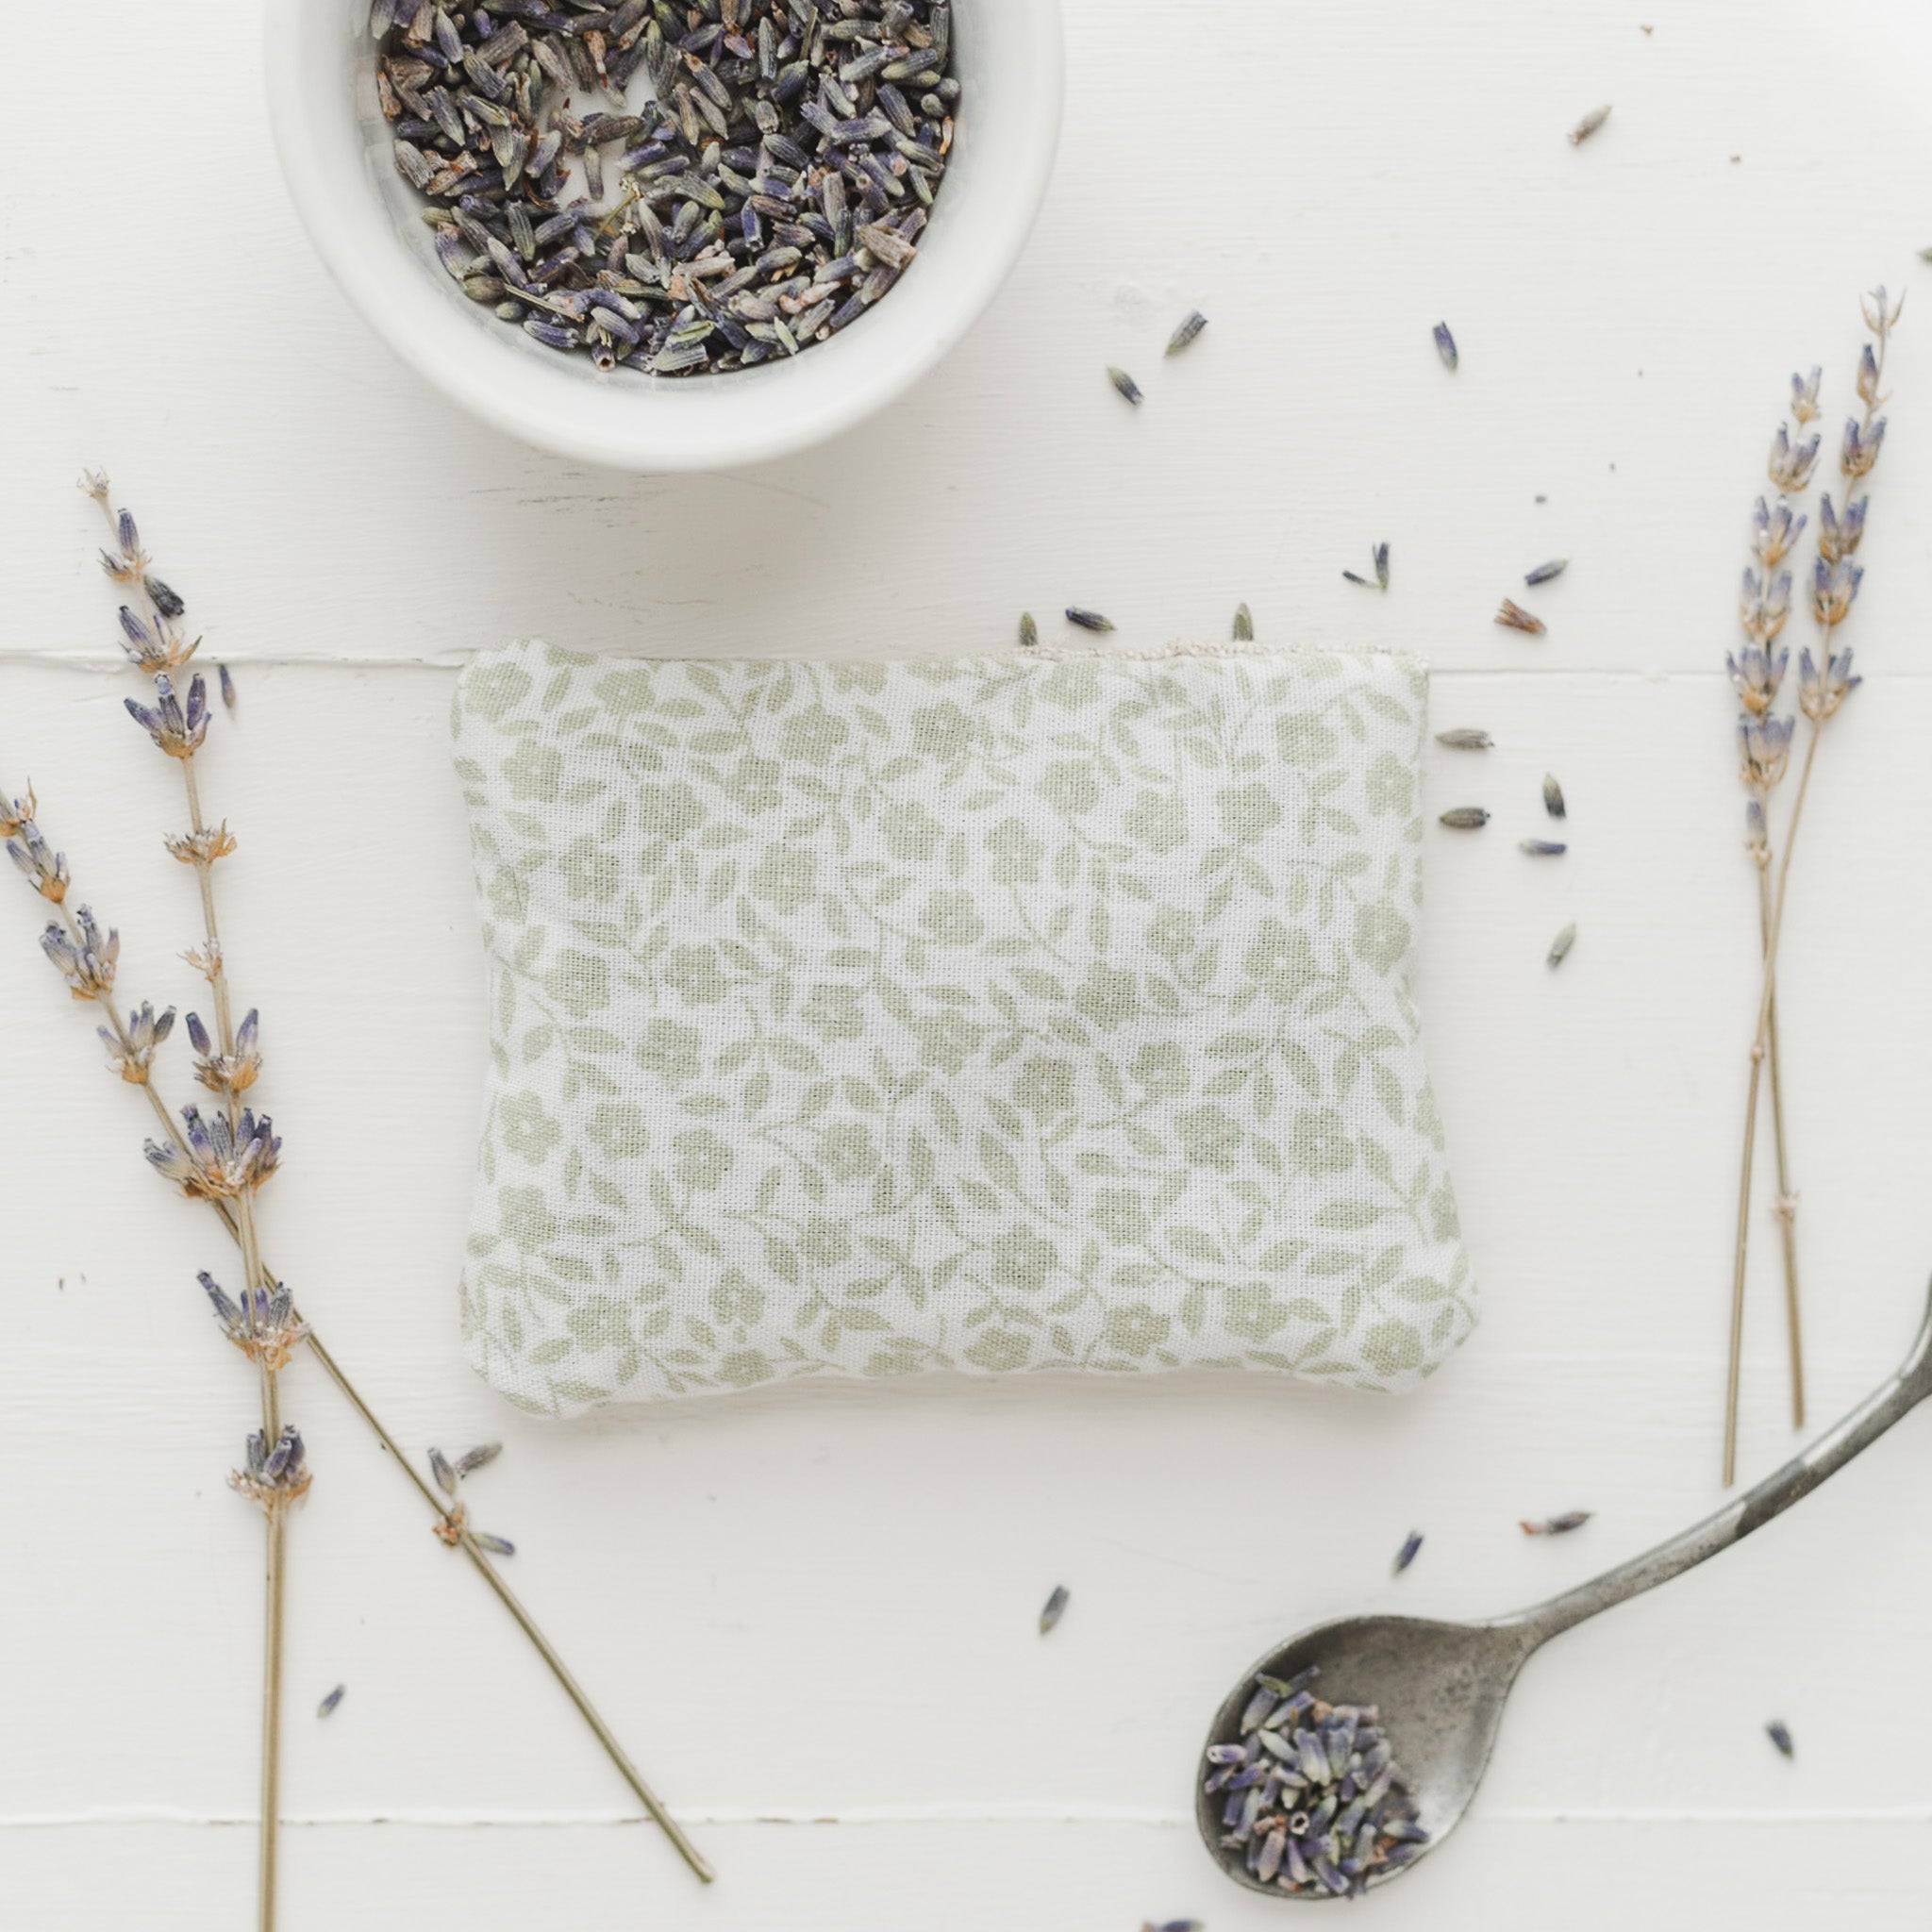 Handmade Lavender Sachet - Set of 3 Green Floral